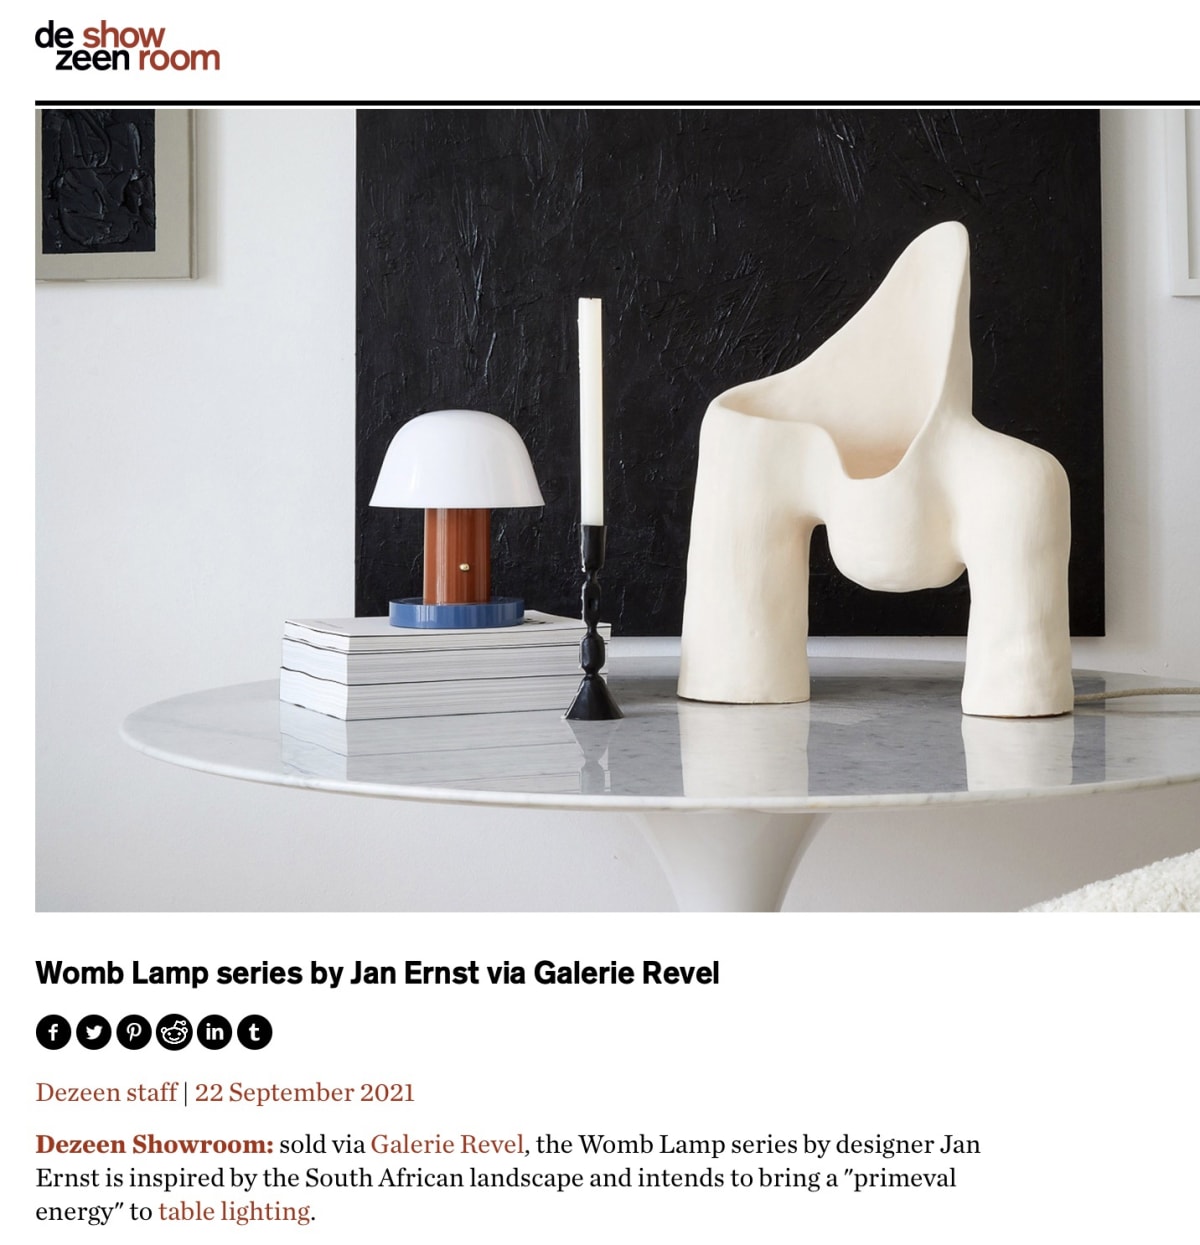 Womb Lamp series by Jan Ernst via Galerie Revel